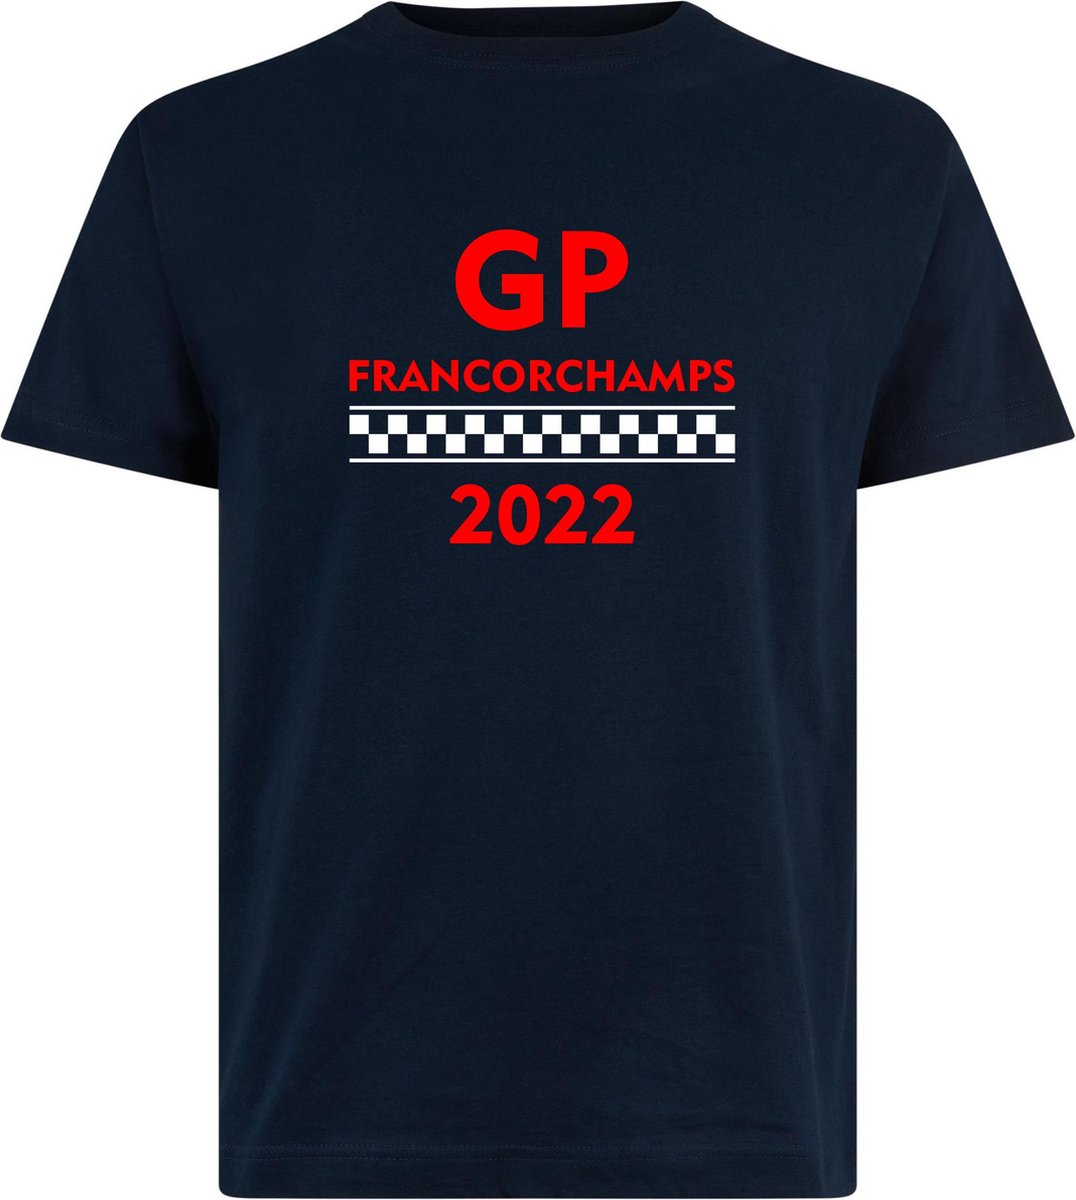 T-shirt kinderen GP Francorchamps 2022 | Max Verstappen / Red Bull Racing / Formule 1 fan | Grand Prix Circuit Spa-Francorchamps | kleding shirt | Navy | maat 152